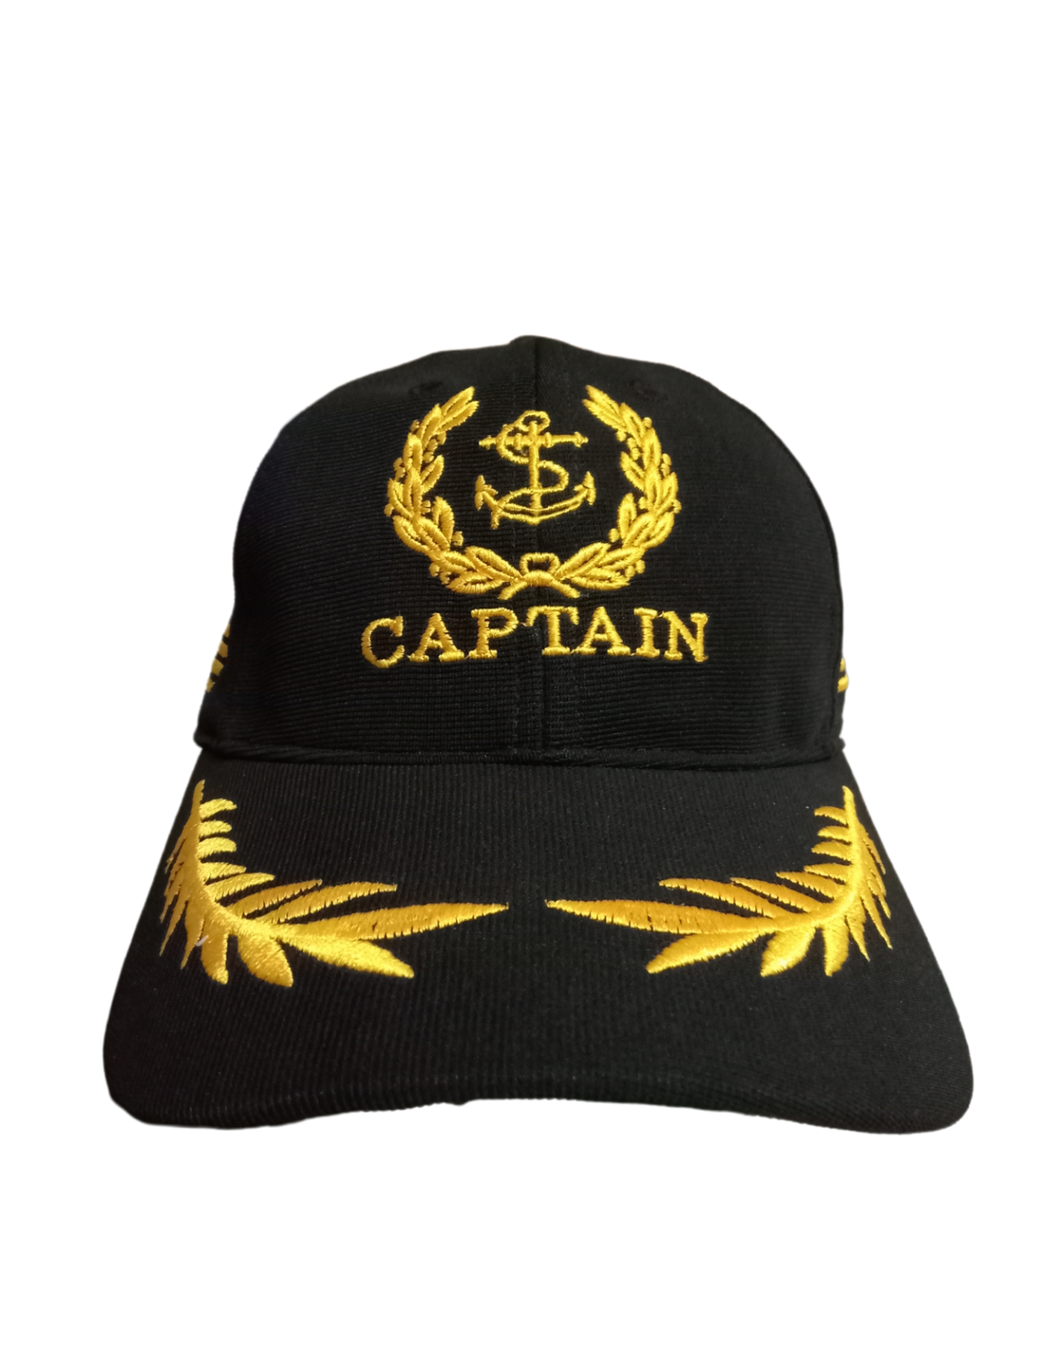 Merchant Navy Captain Embroidered Black Adult Unisex Cap - Premium Quality